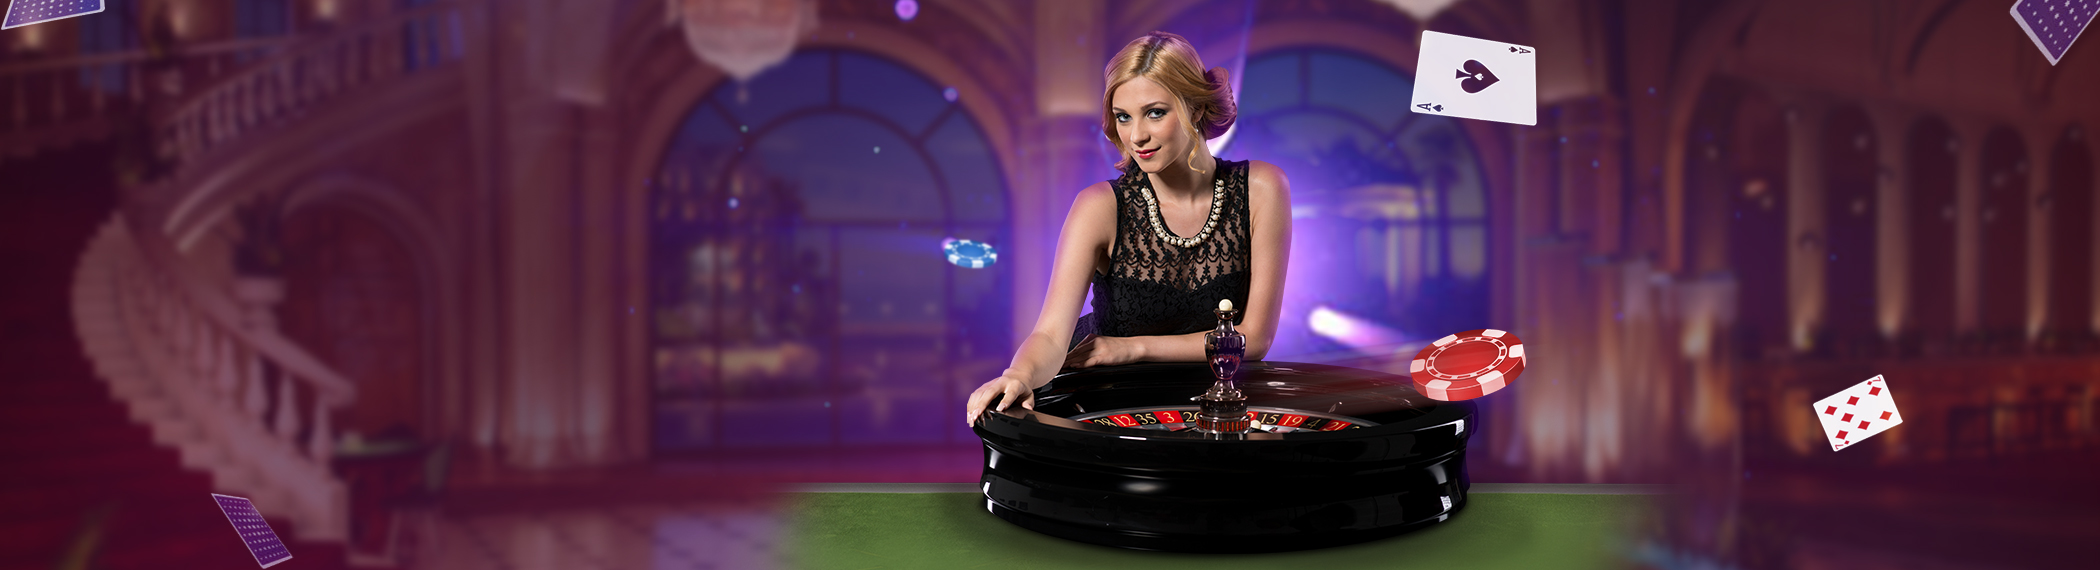 UK Casino Site | Top Slot Site Mega Deals | £100 Welcome Offers